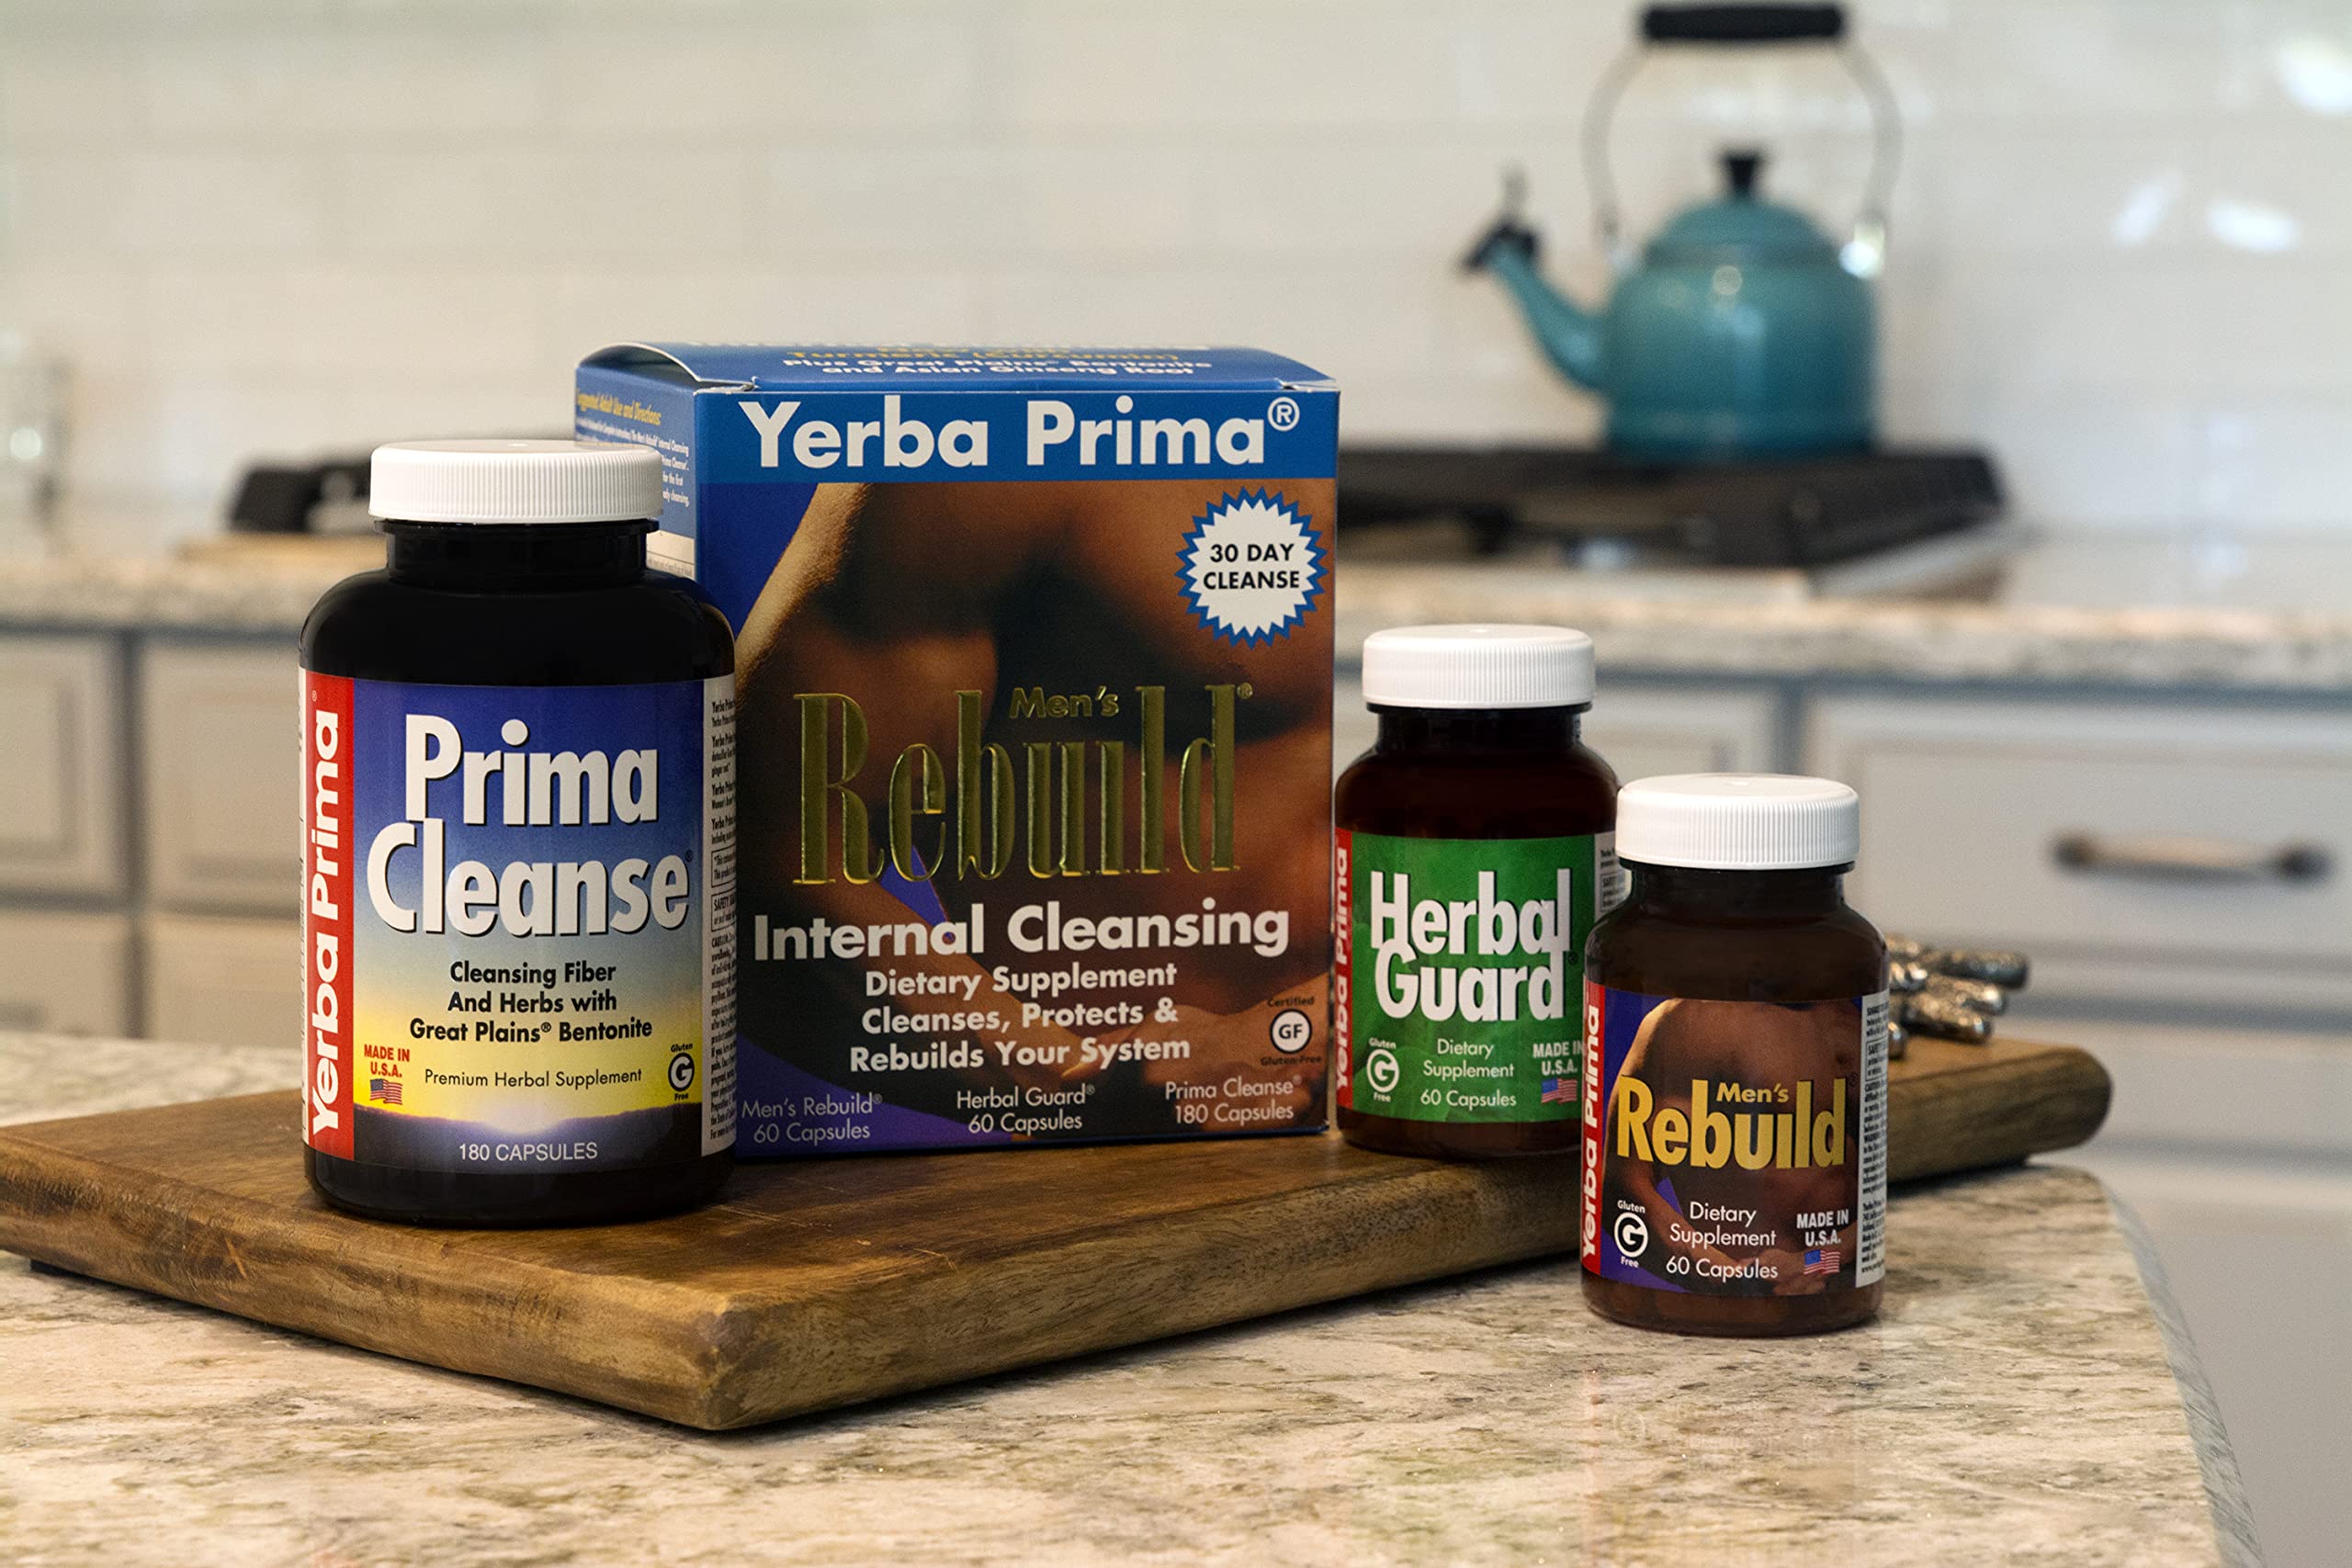 Yerba Prima Cleanse Men Rebuild Kit - 30 Day Internal Cleansing Supplements Designed for Males - Prostate & Colon Health - Kidney & Liver - Natural Herbal Psyllium Fiber, Aloe Vera, Milk Thistle Seed